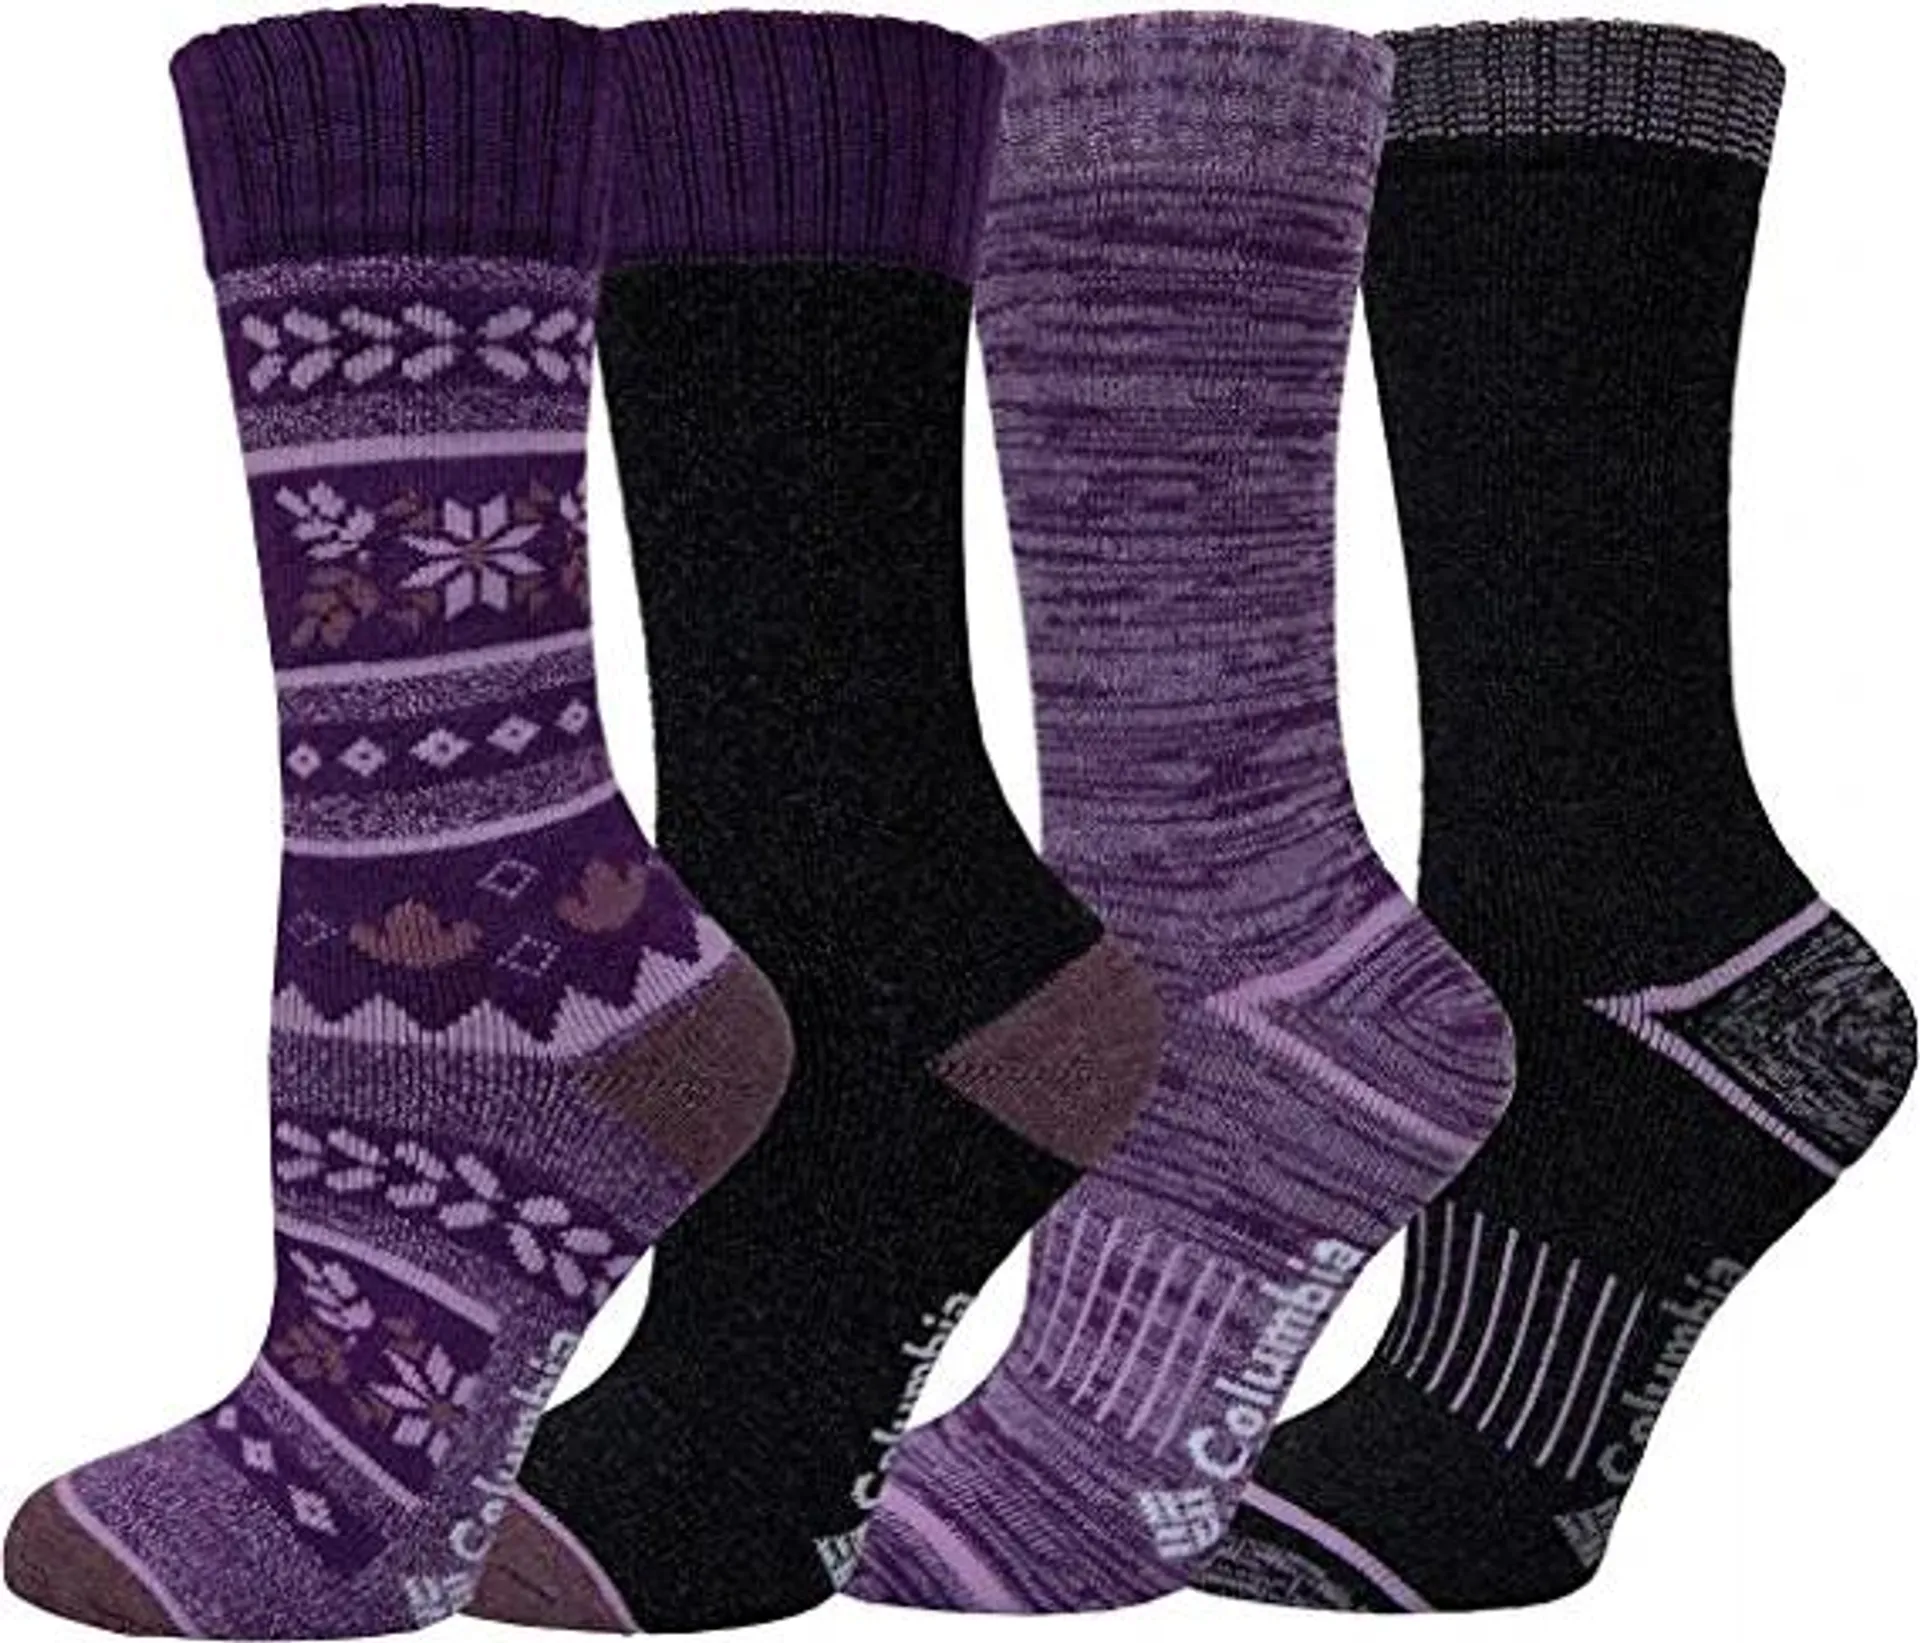 Columbia Women's Triangles Winter Soltice Crew Socks 4 Pair, Wild Iris/Char/W.Iris/Char, One Size